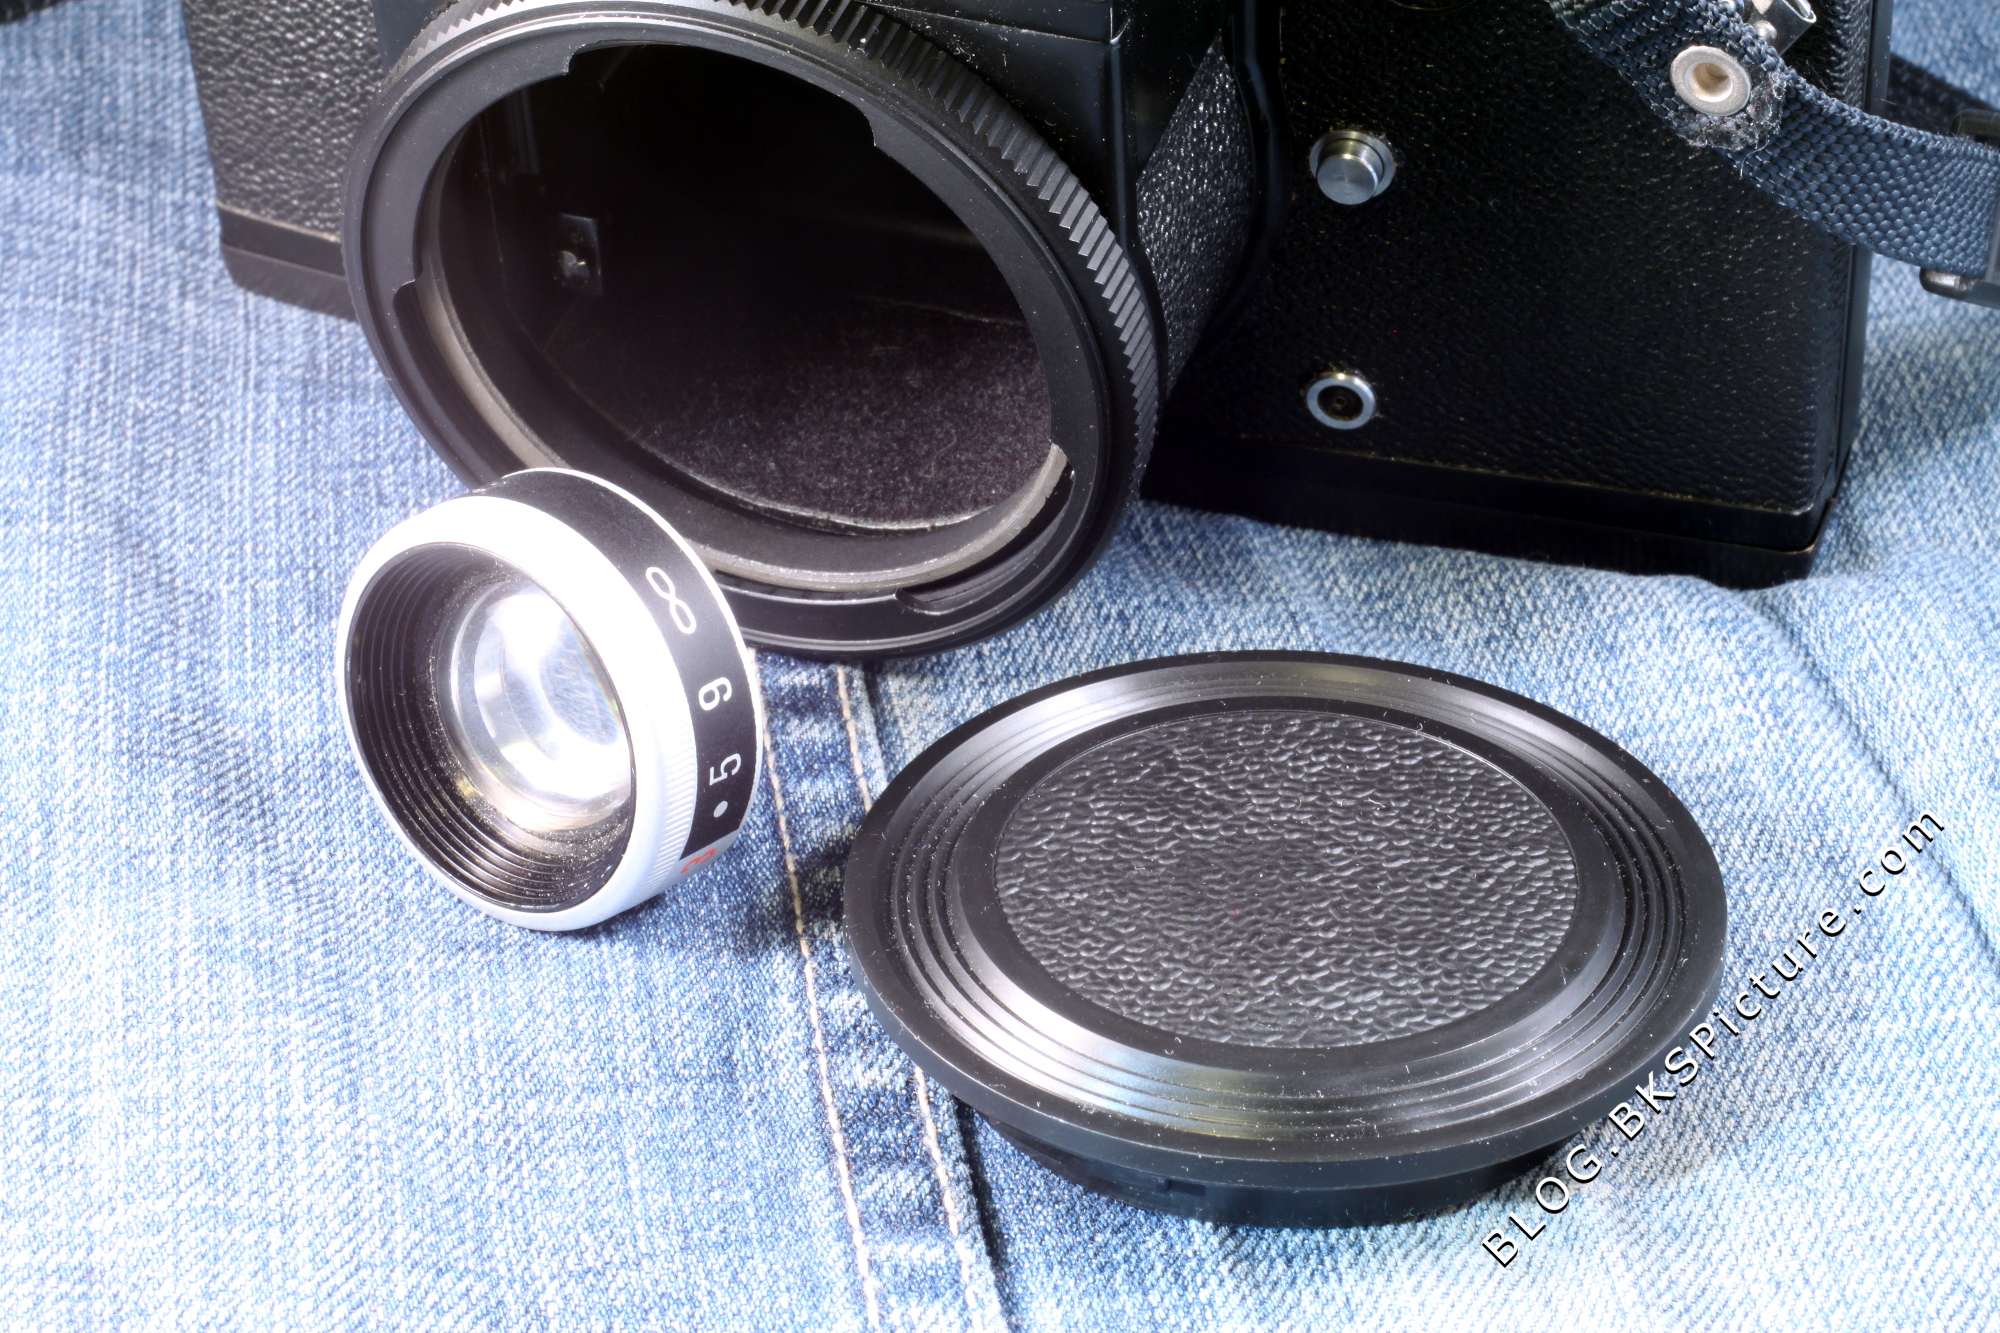 Use a Polariod lens on a modern camera